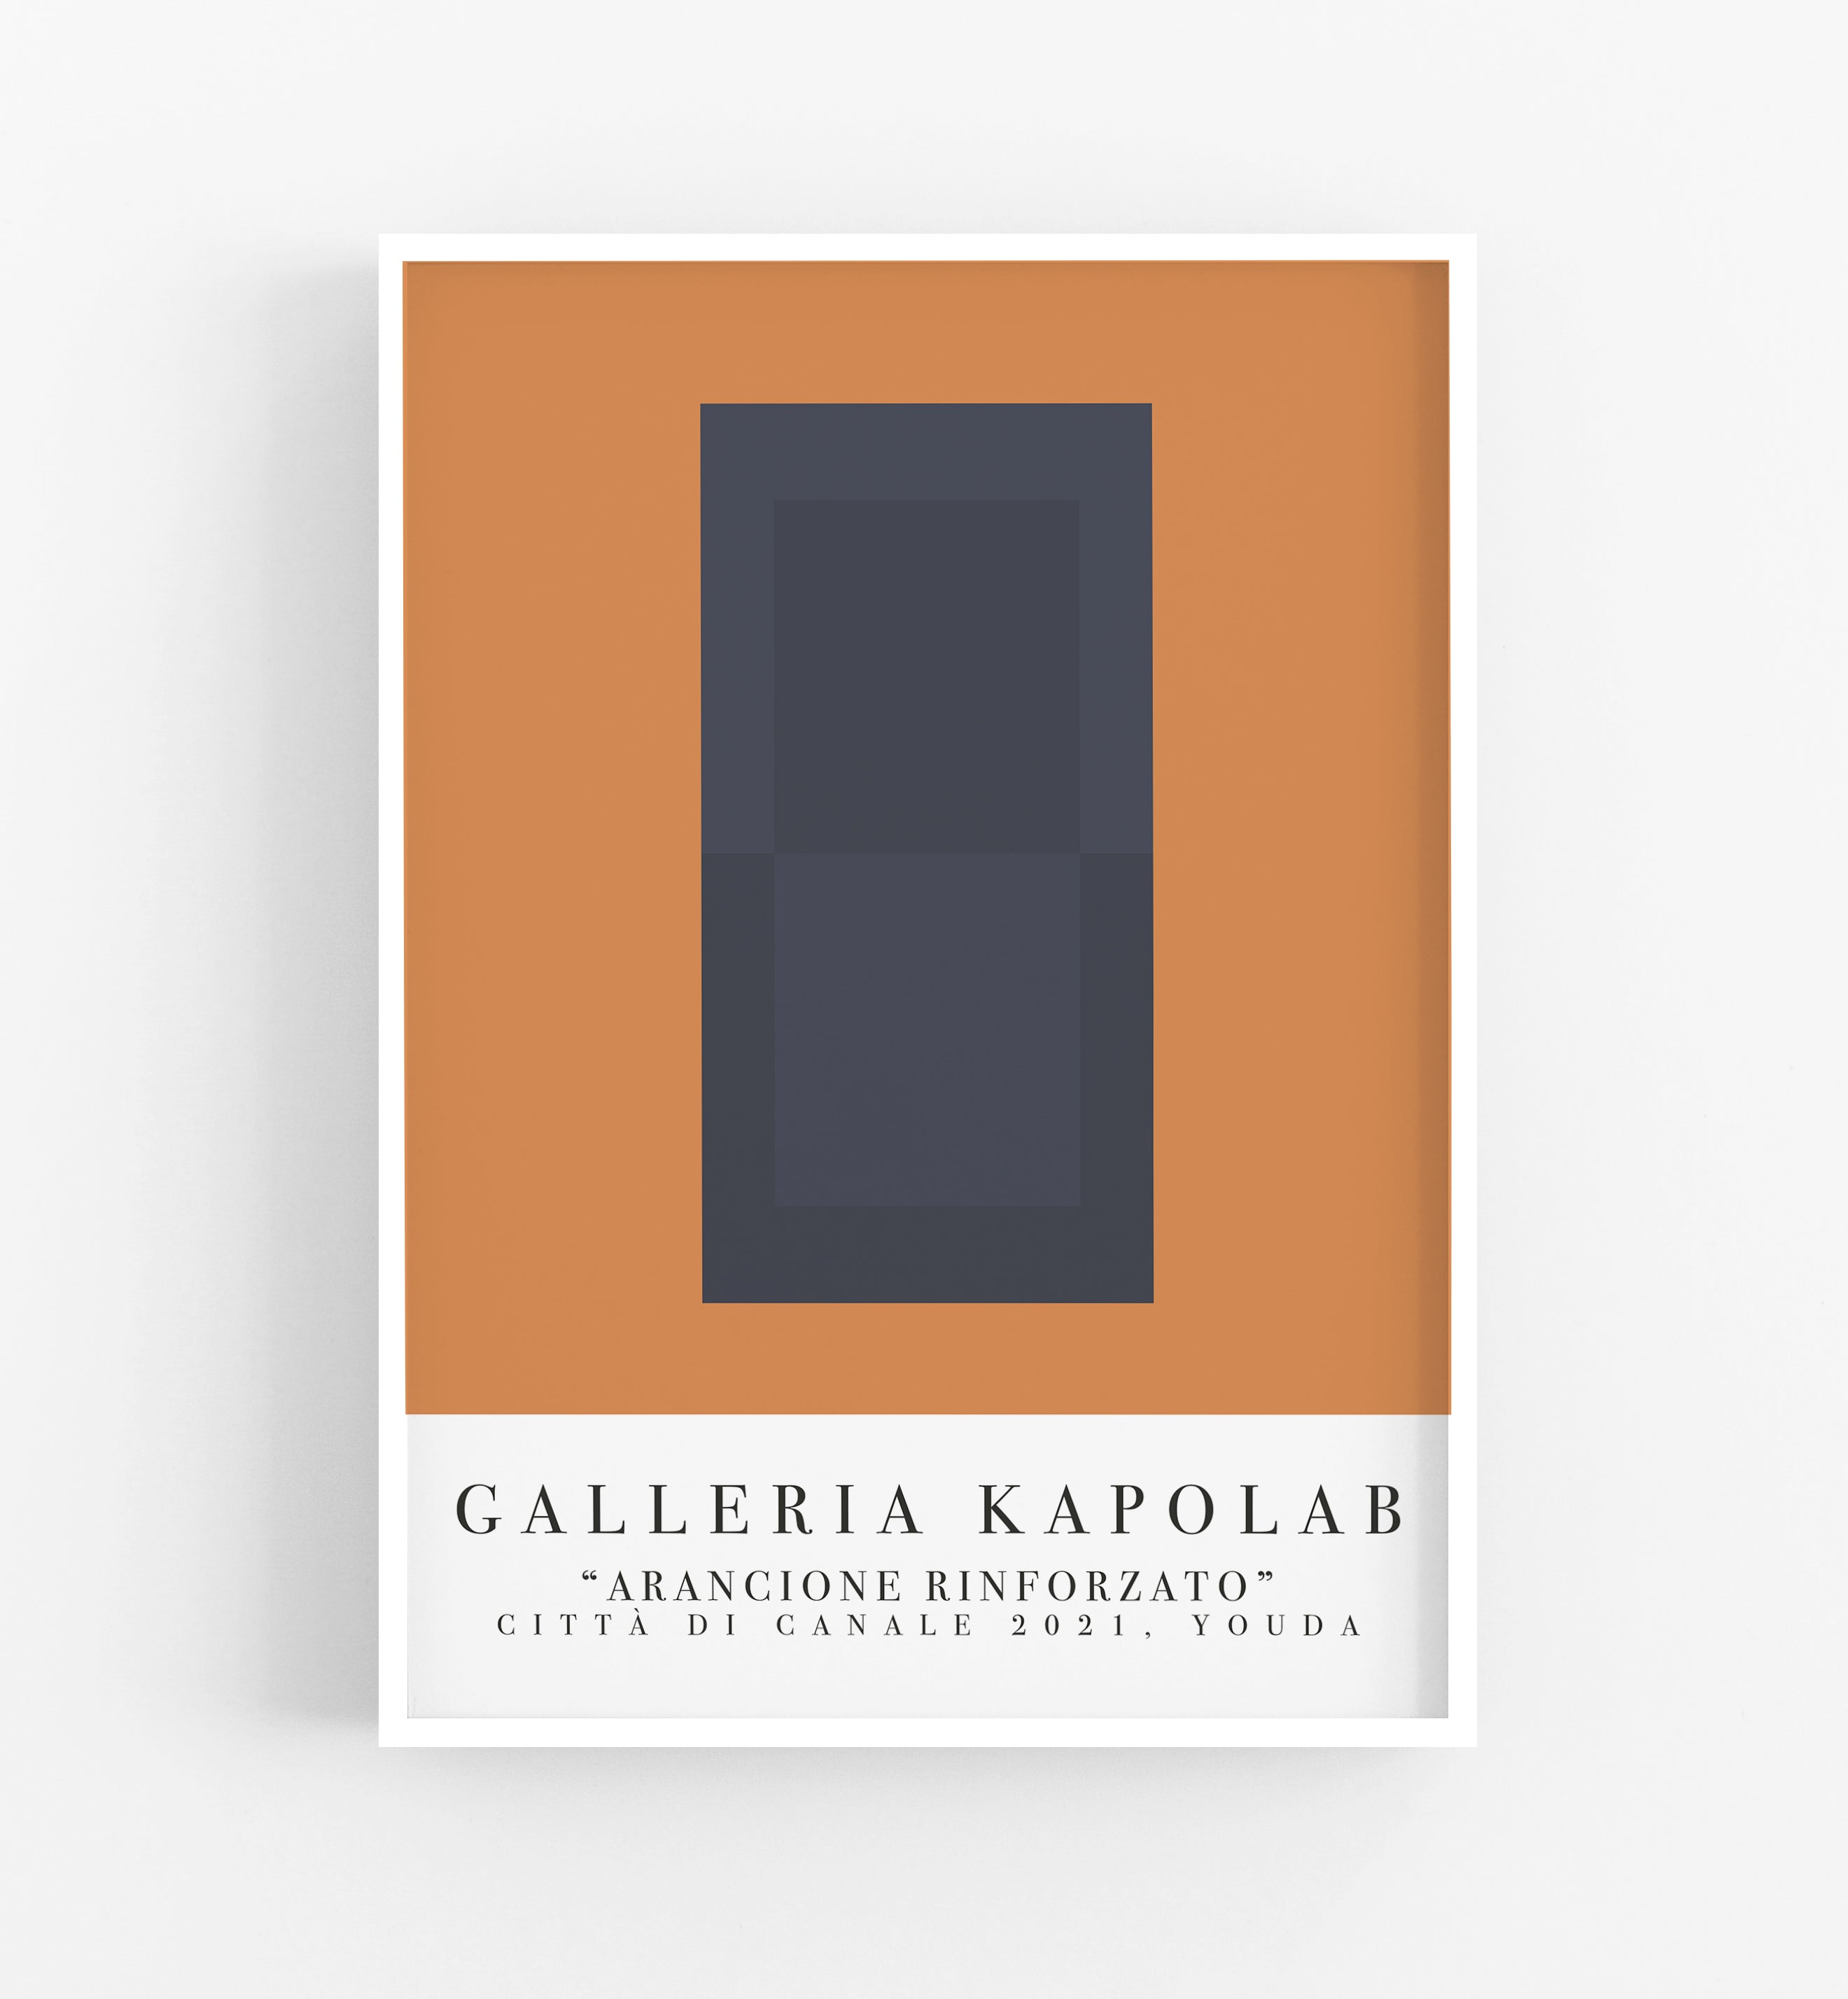 Galleria Kapolab Arancione Rinforzato